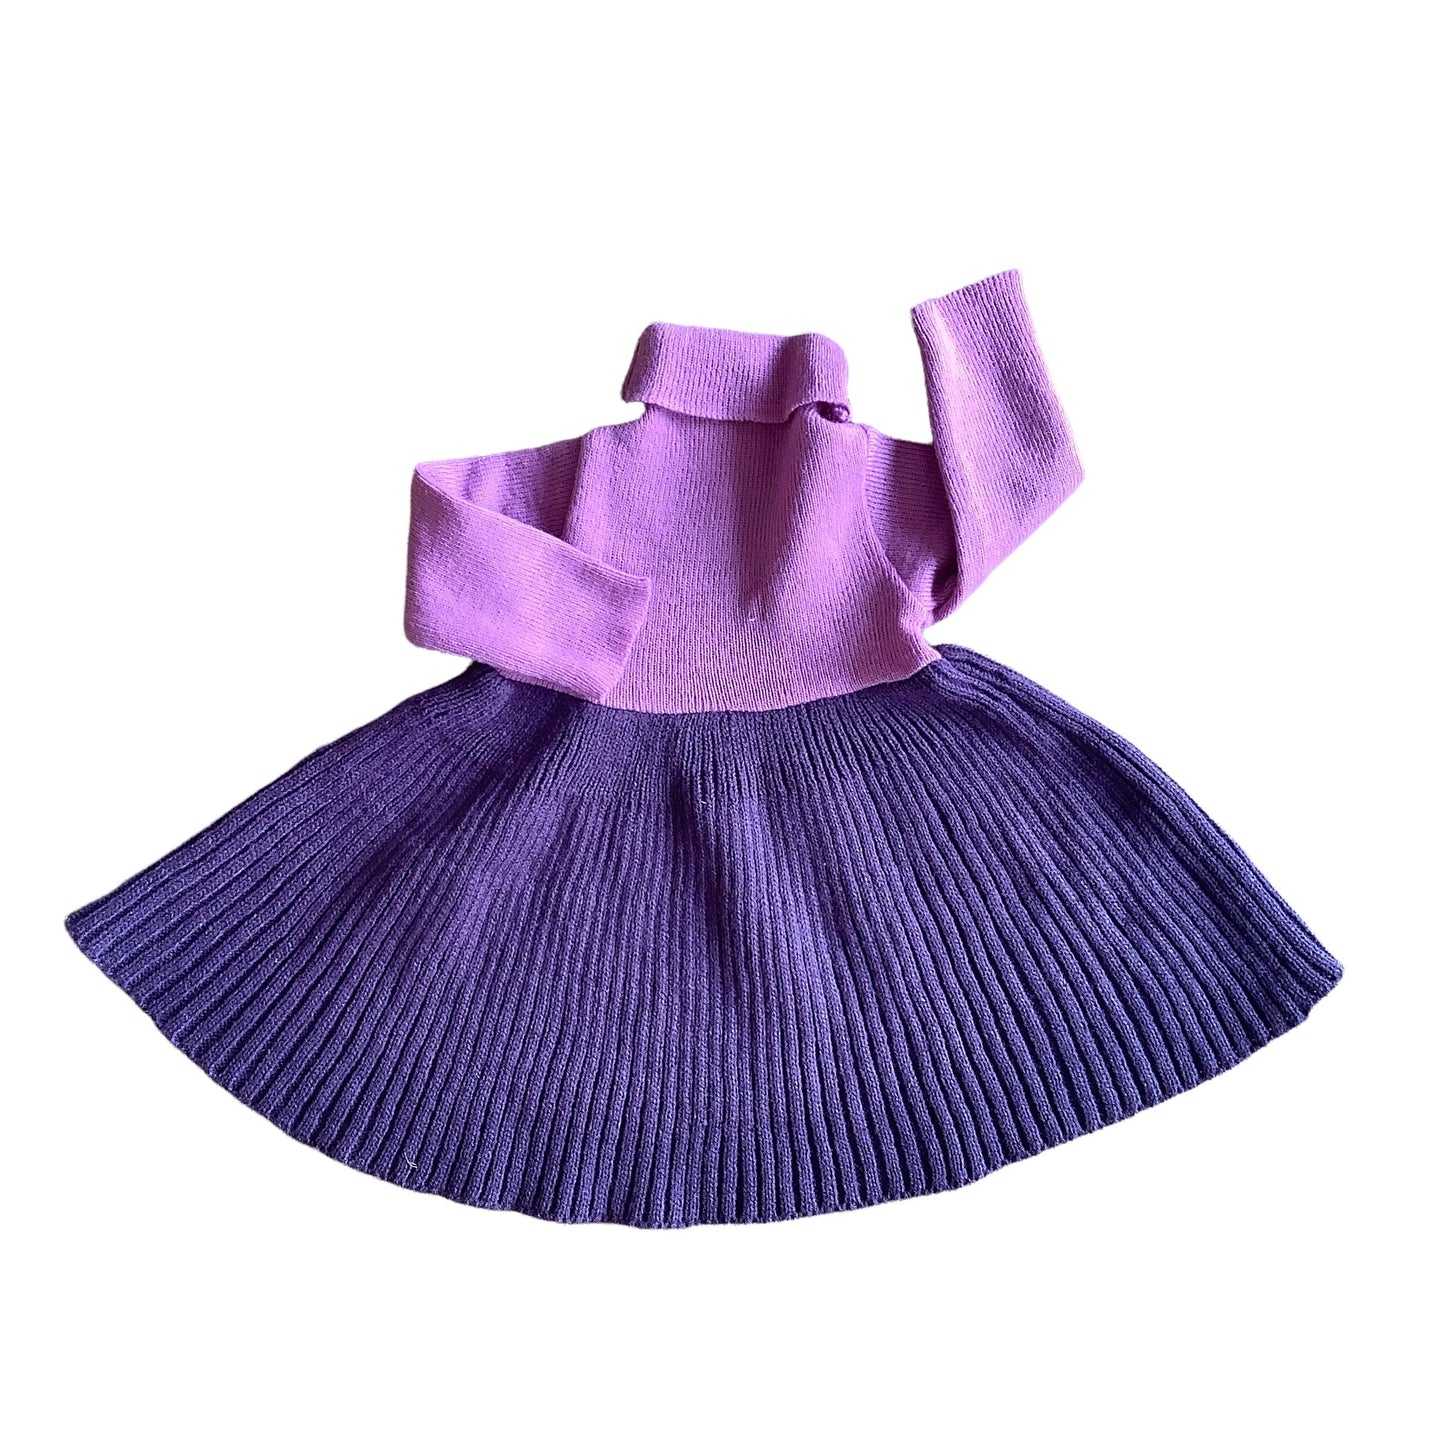 1970s Purple Knitted Turtleneck Dress / 0-3 Months